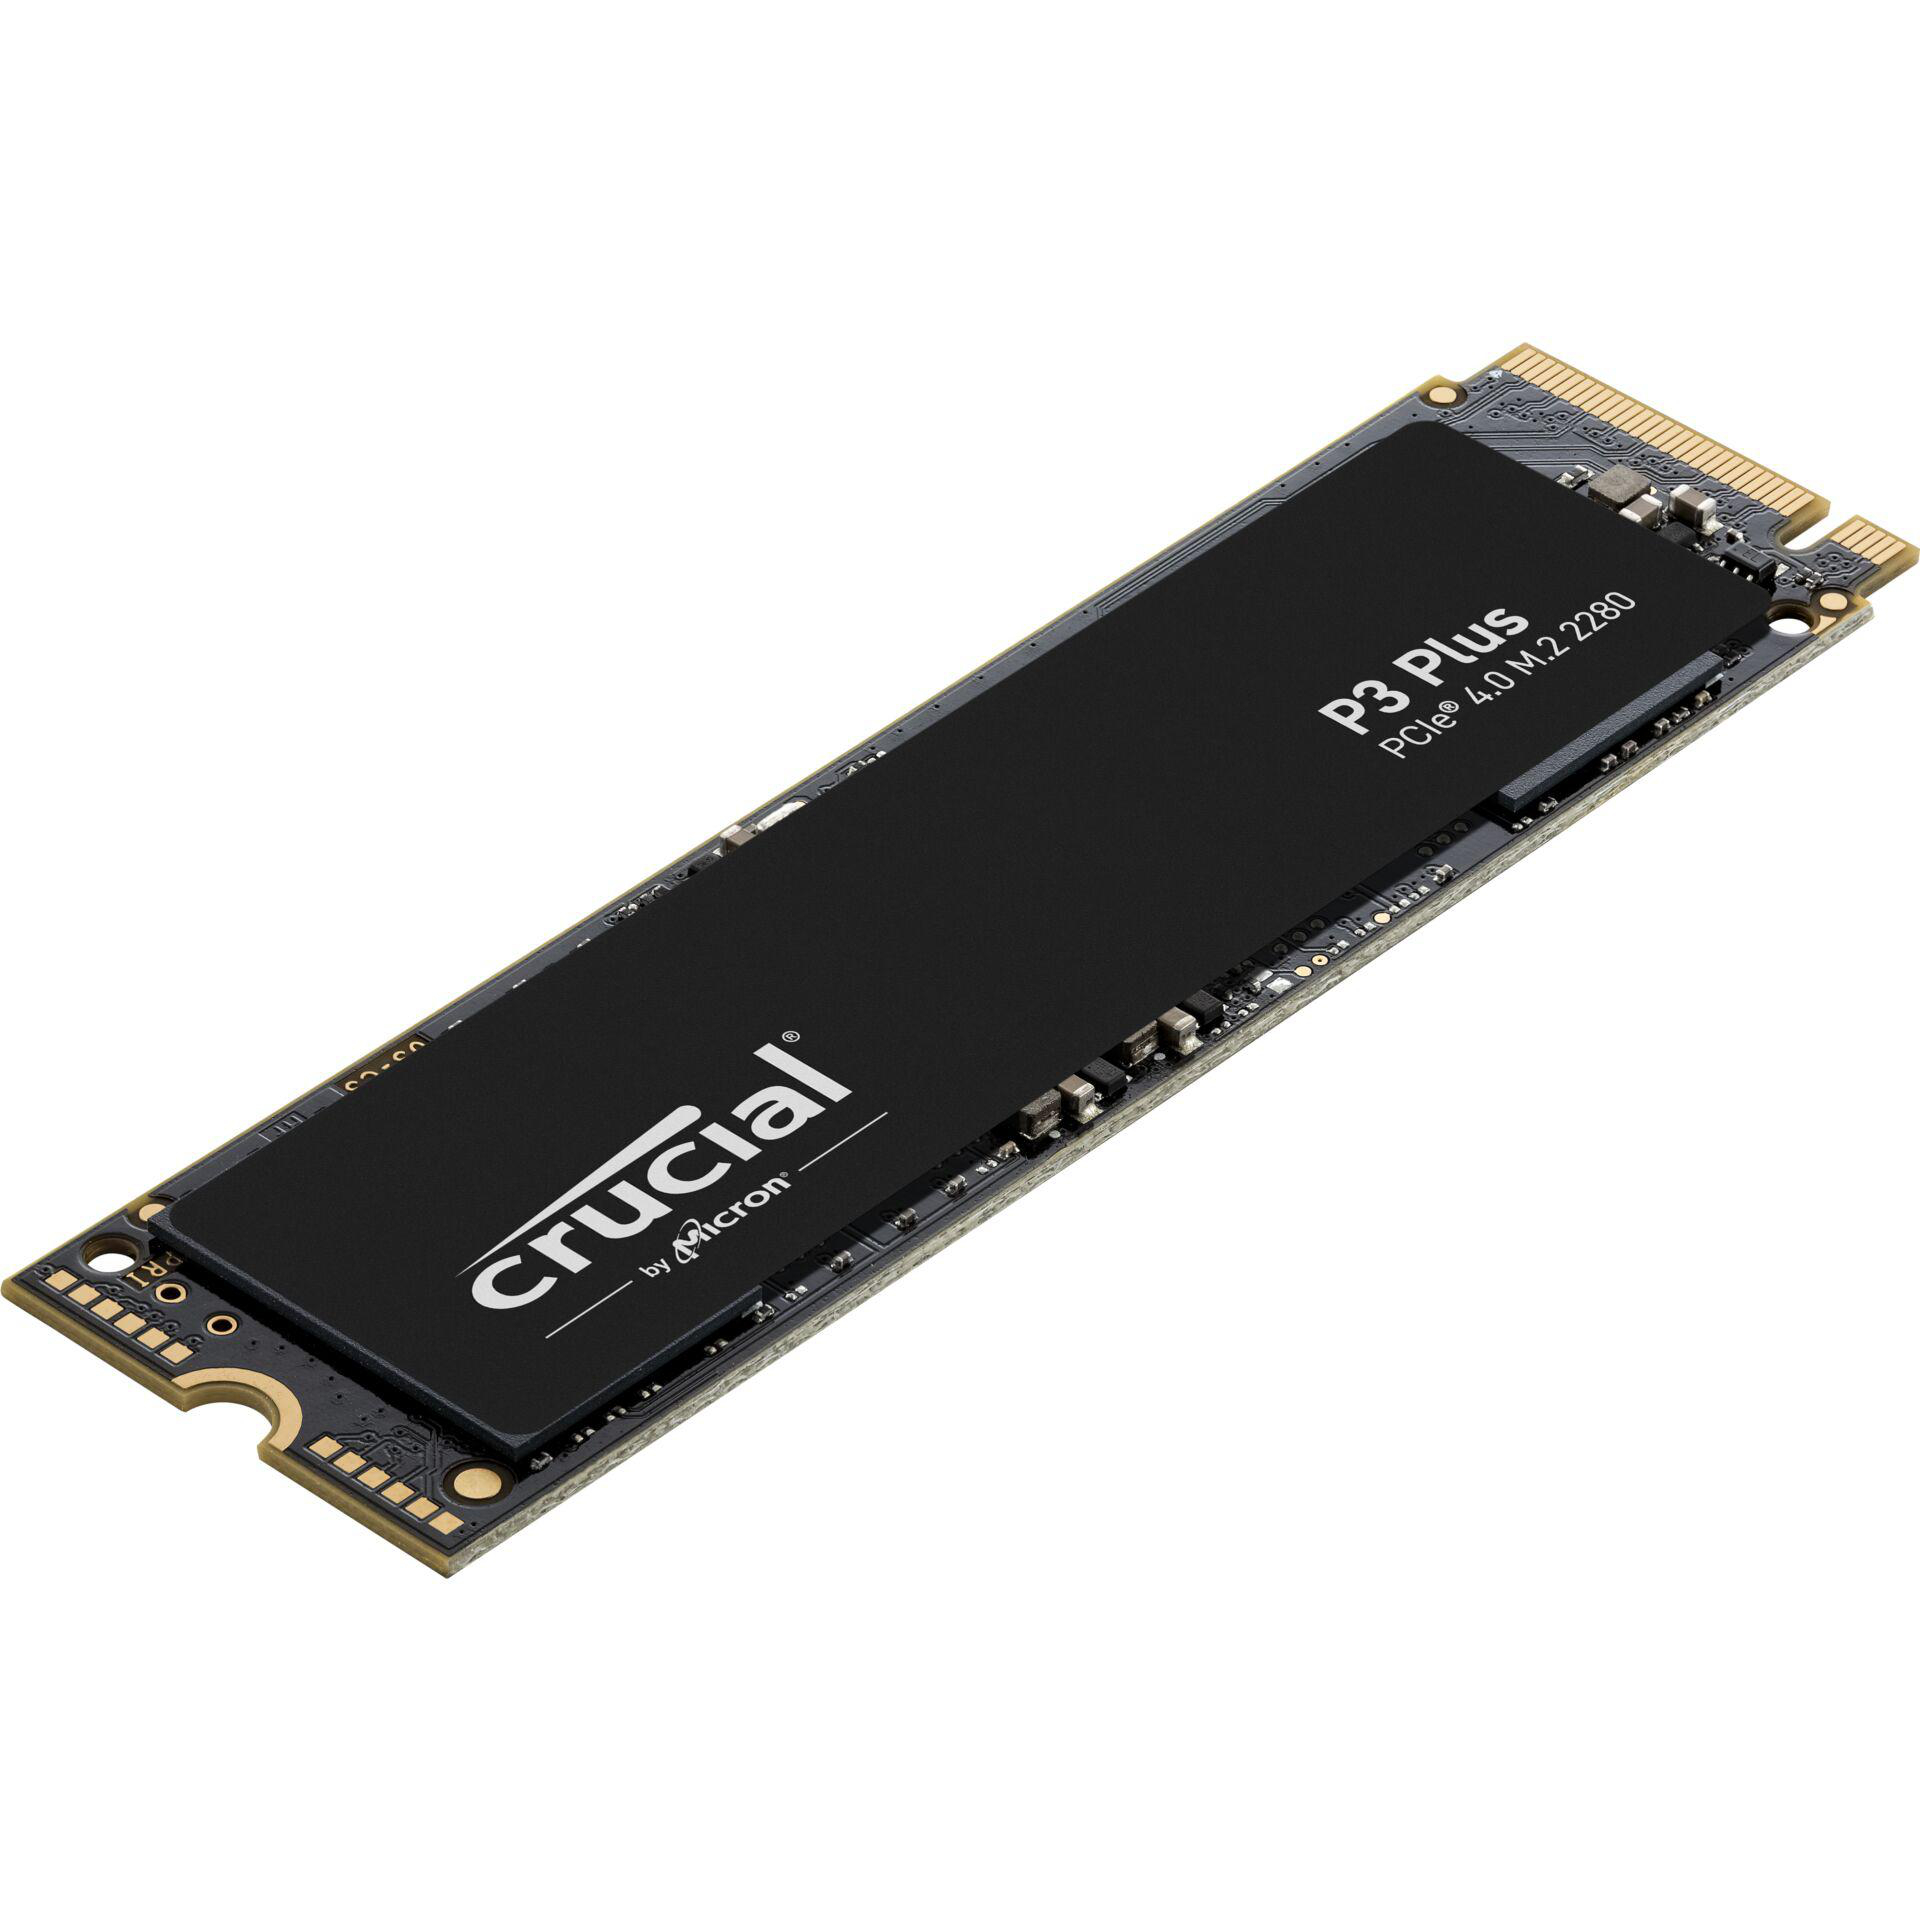 CRUCIAL P3 Plus SSD PCIe, via 4 SSD TB M.2 intern, intern